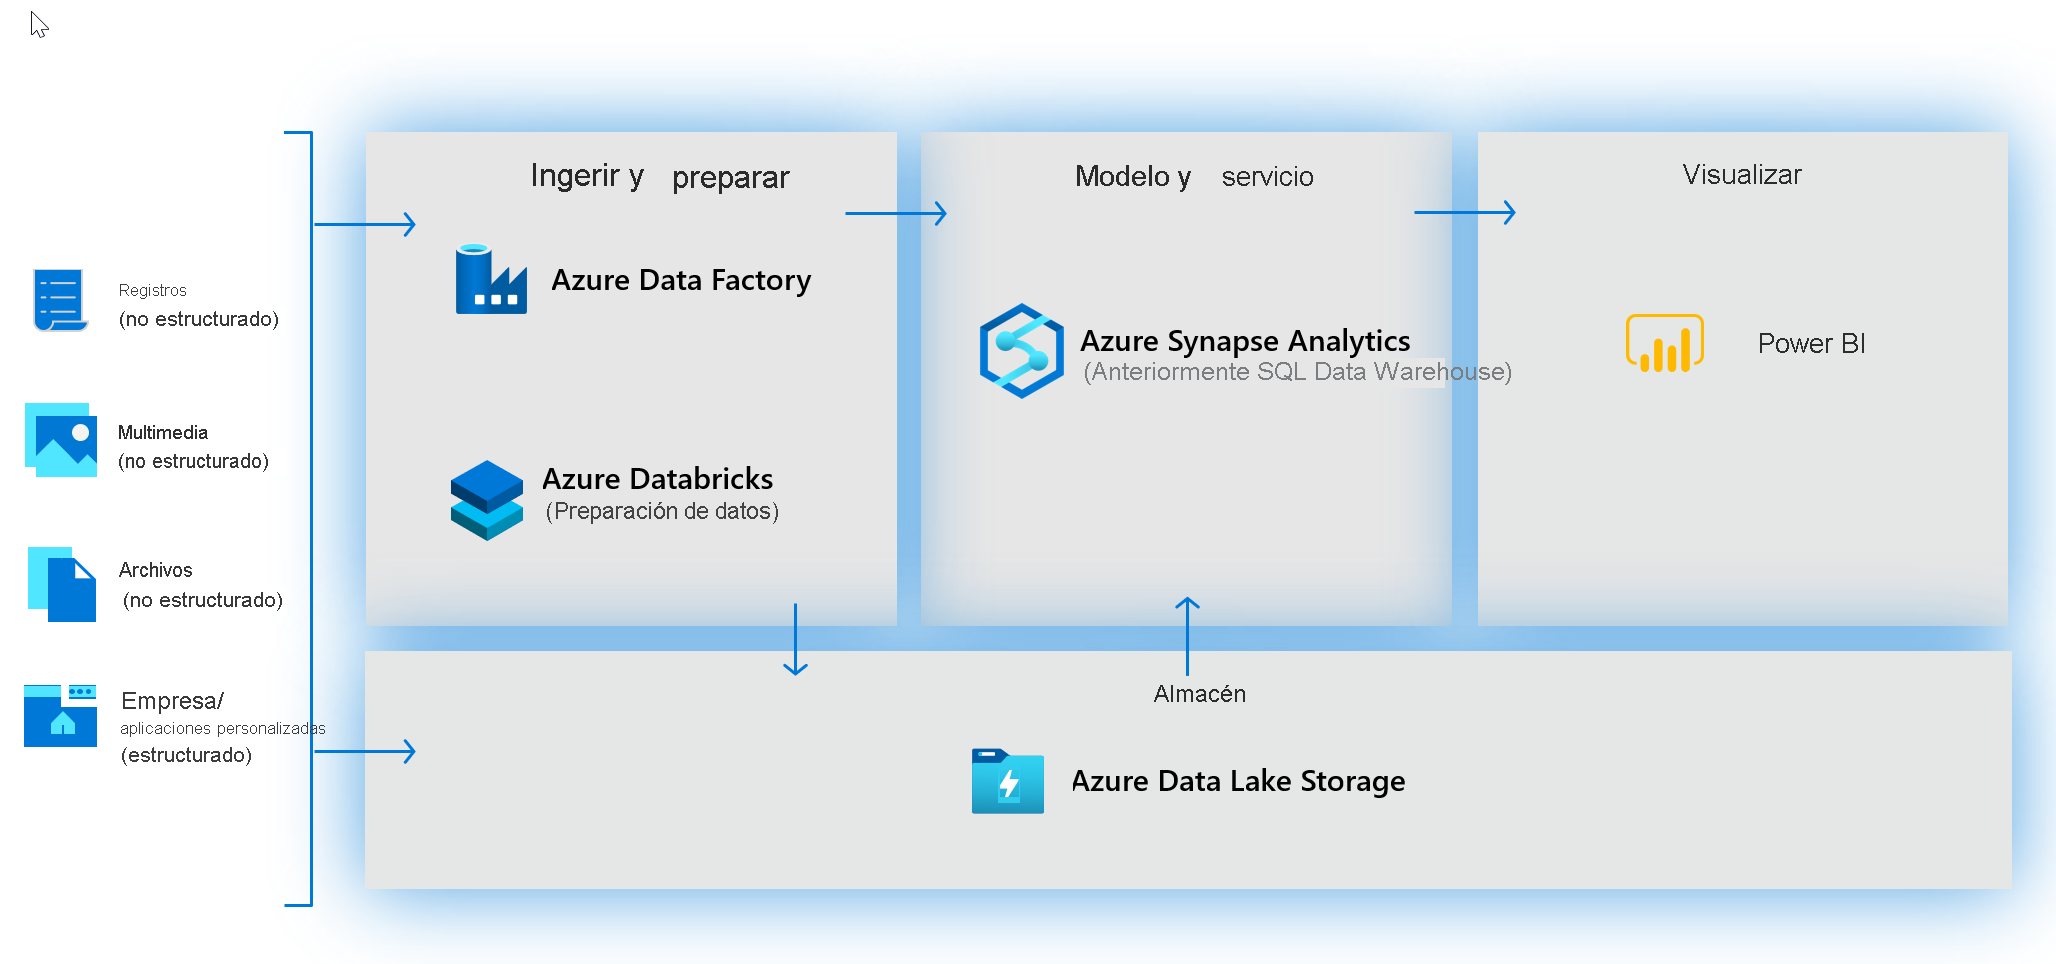 Building modern data warehouses before Azure Synapse Analytics